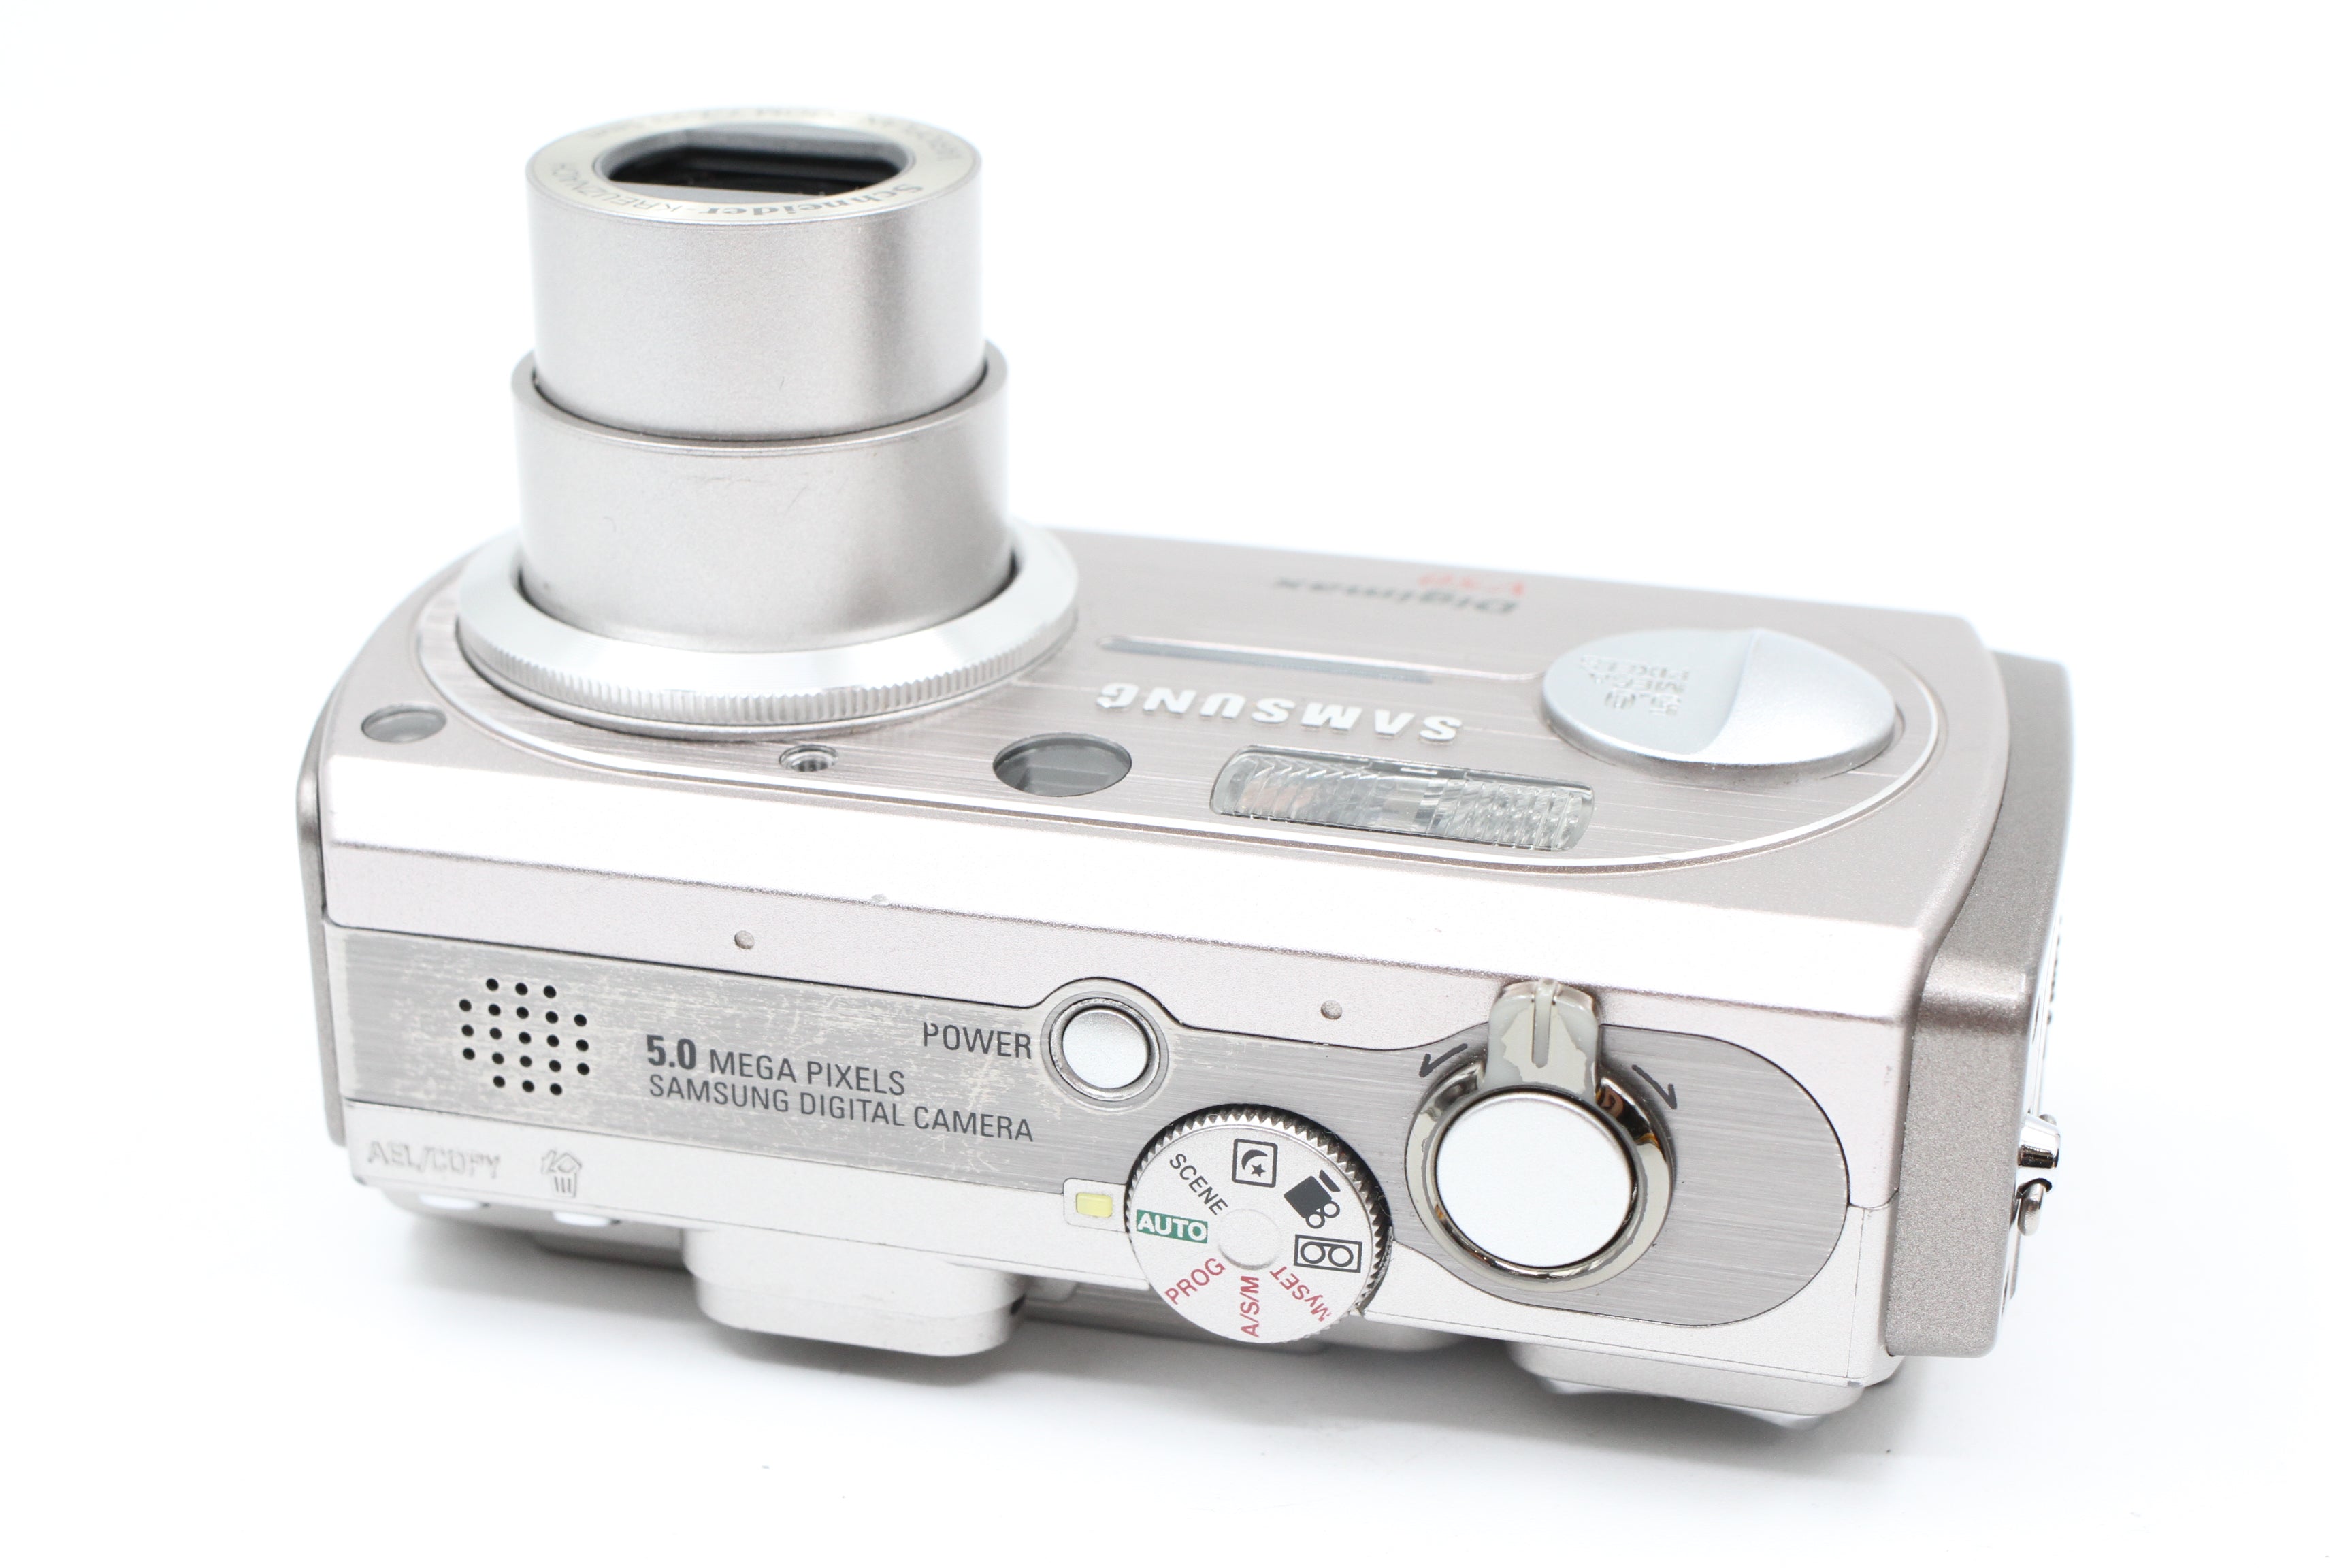 Samsung Digimax V50 5.0mp Digital Compact Camera w/ Case